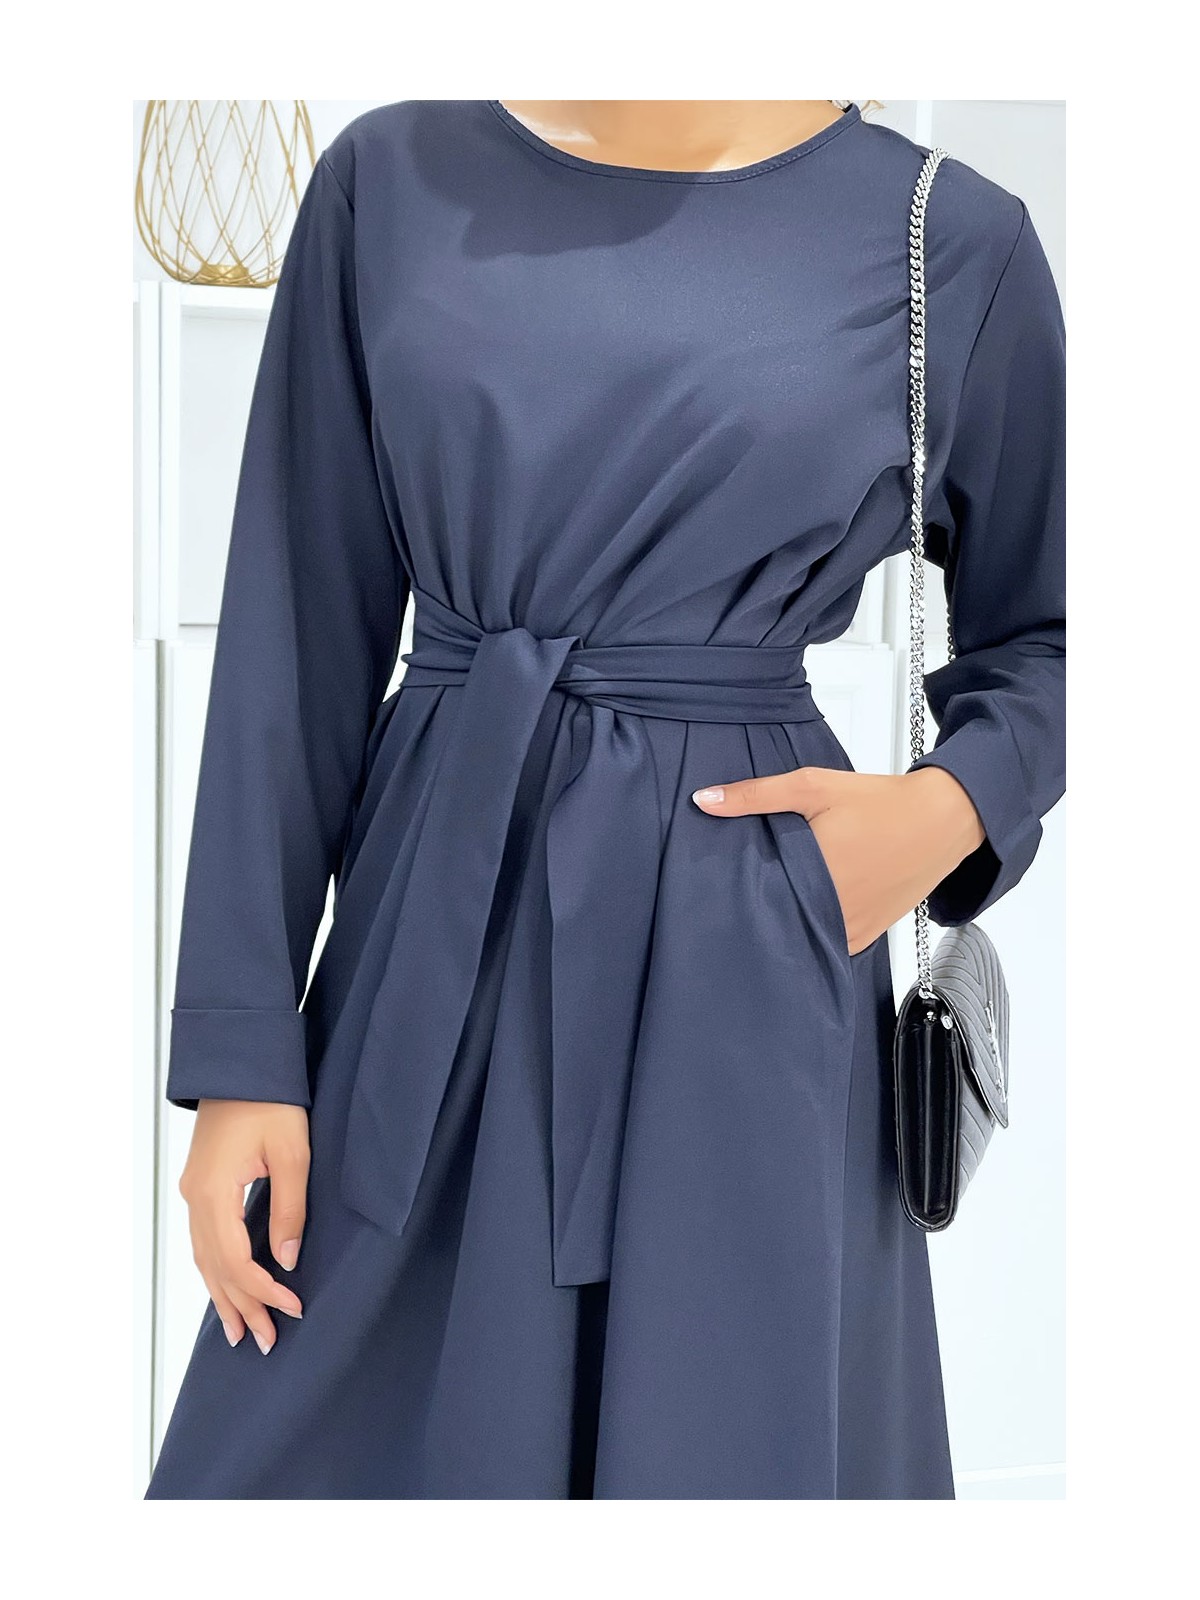 Longue abaya marine avec poches et ceinture - 6